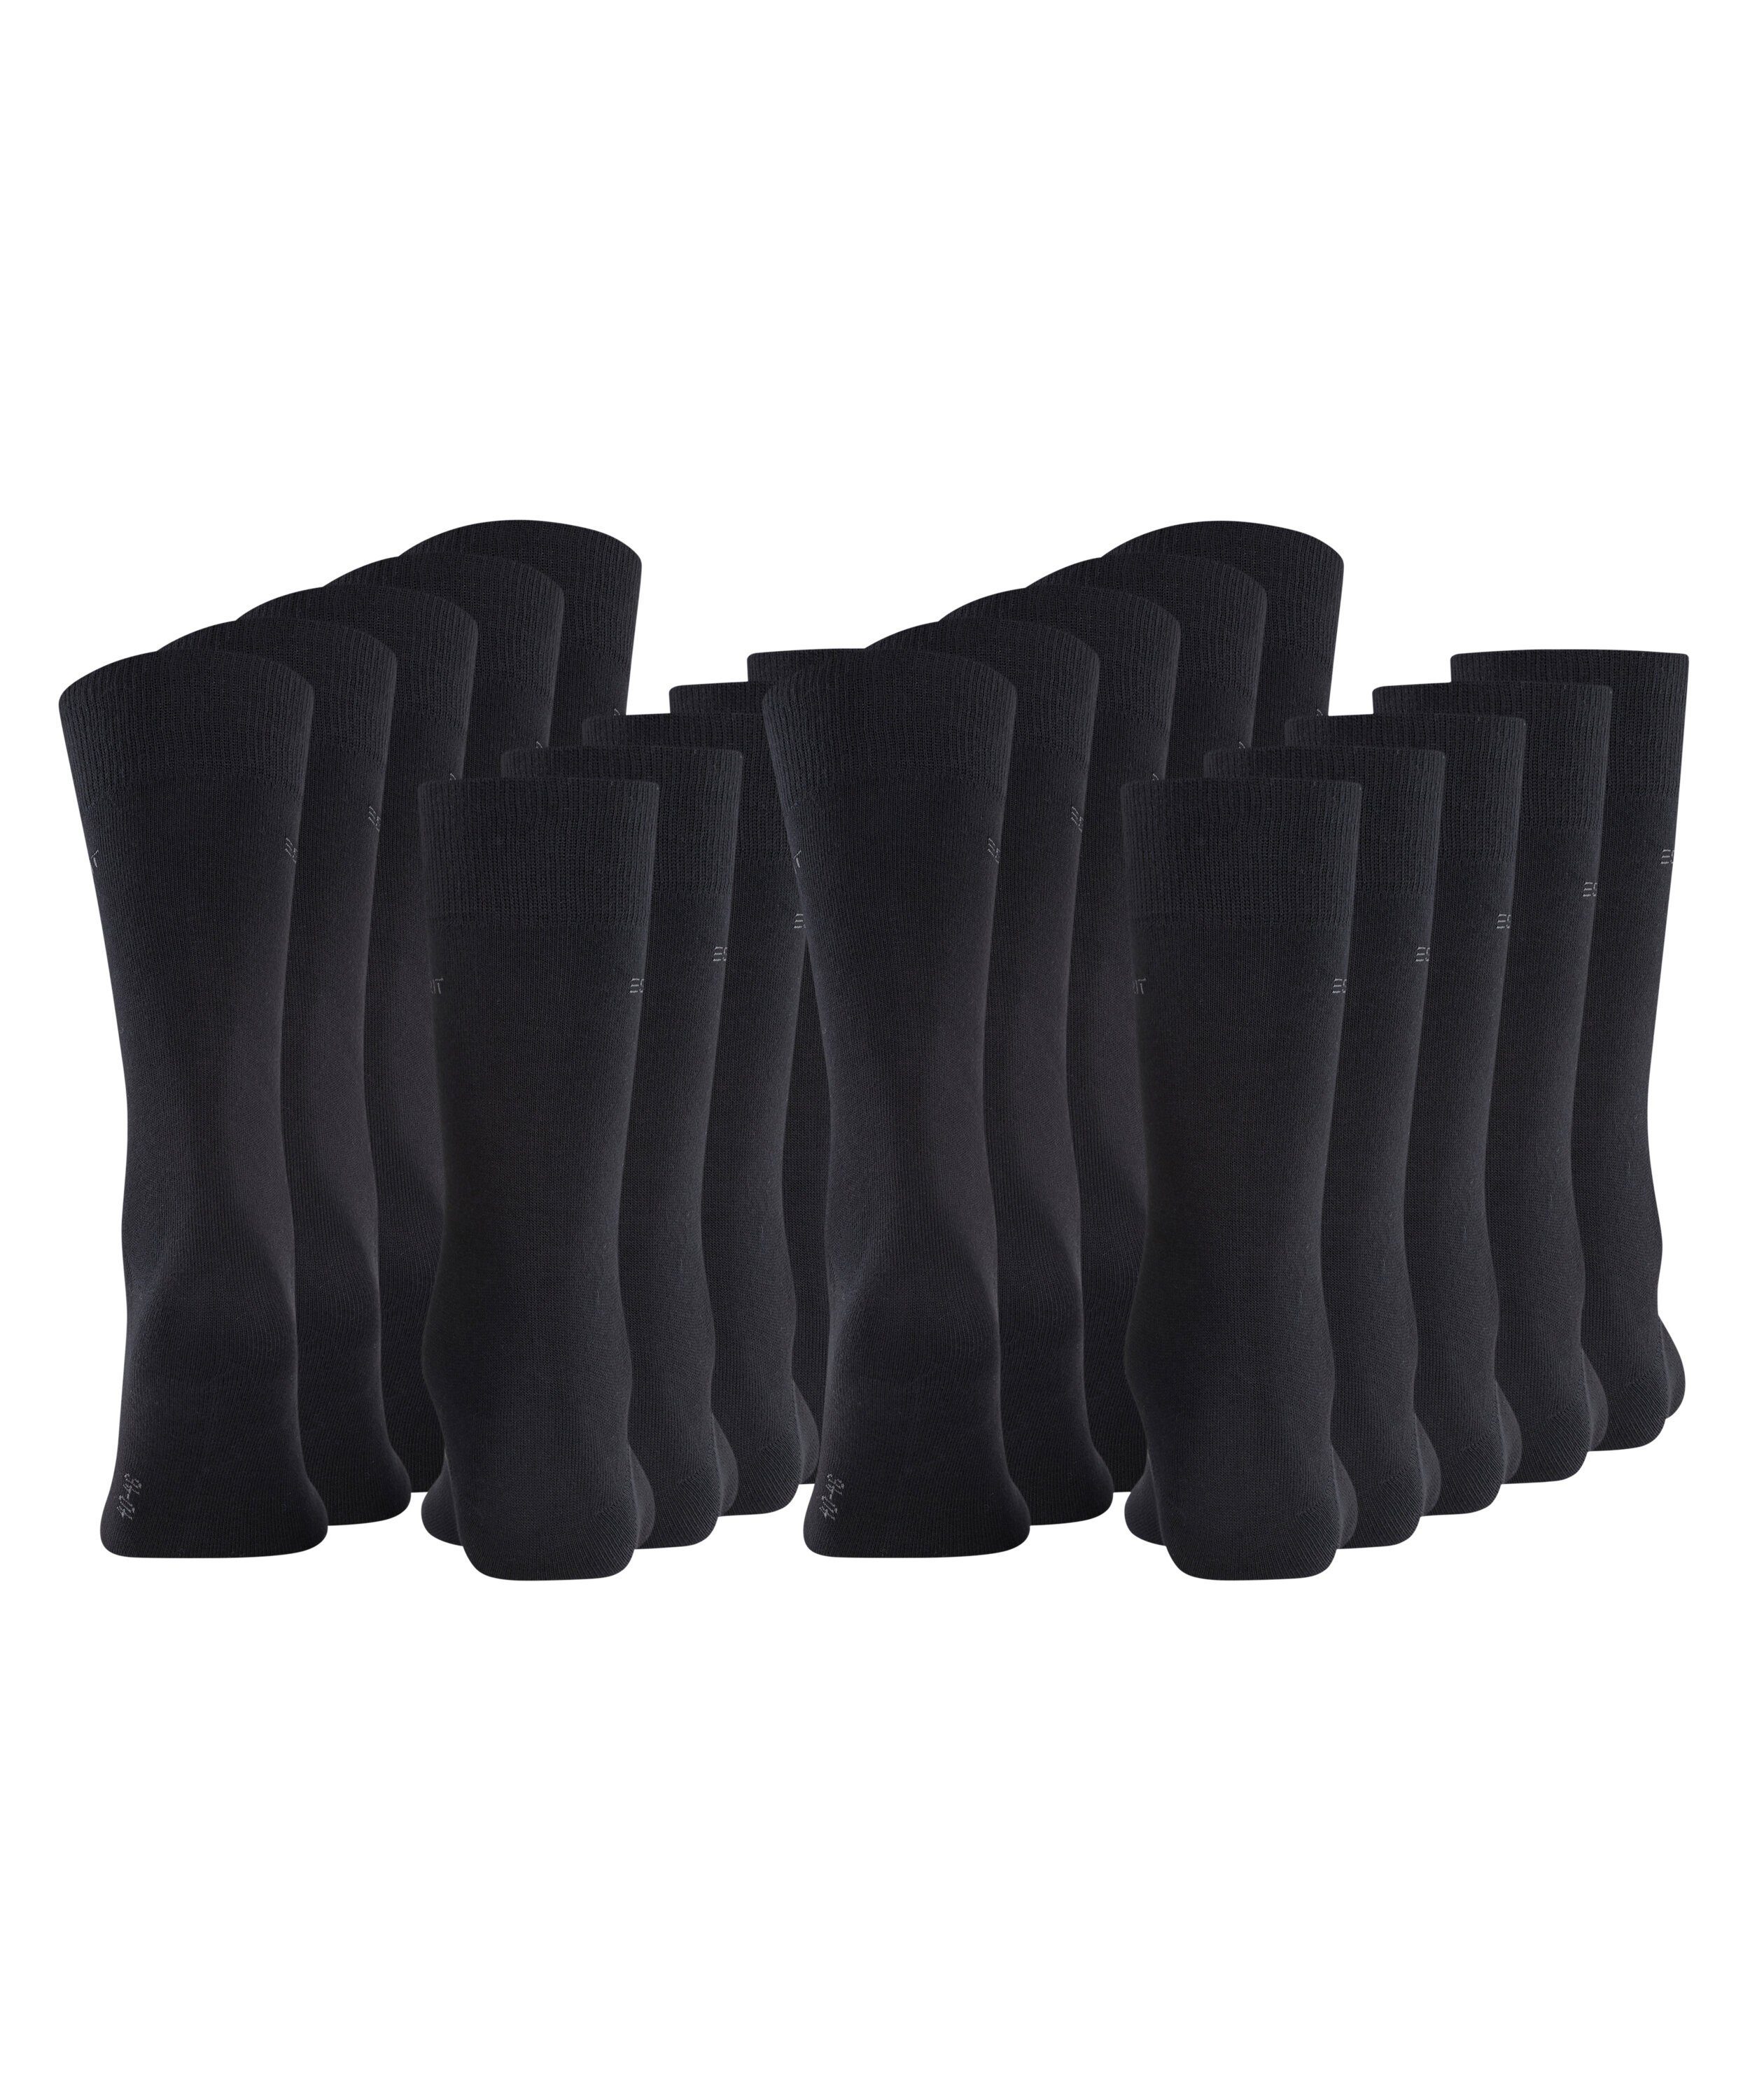 Esprit Uni (10-Paar) black (3000) Socken 10-Pack